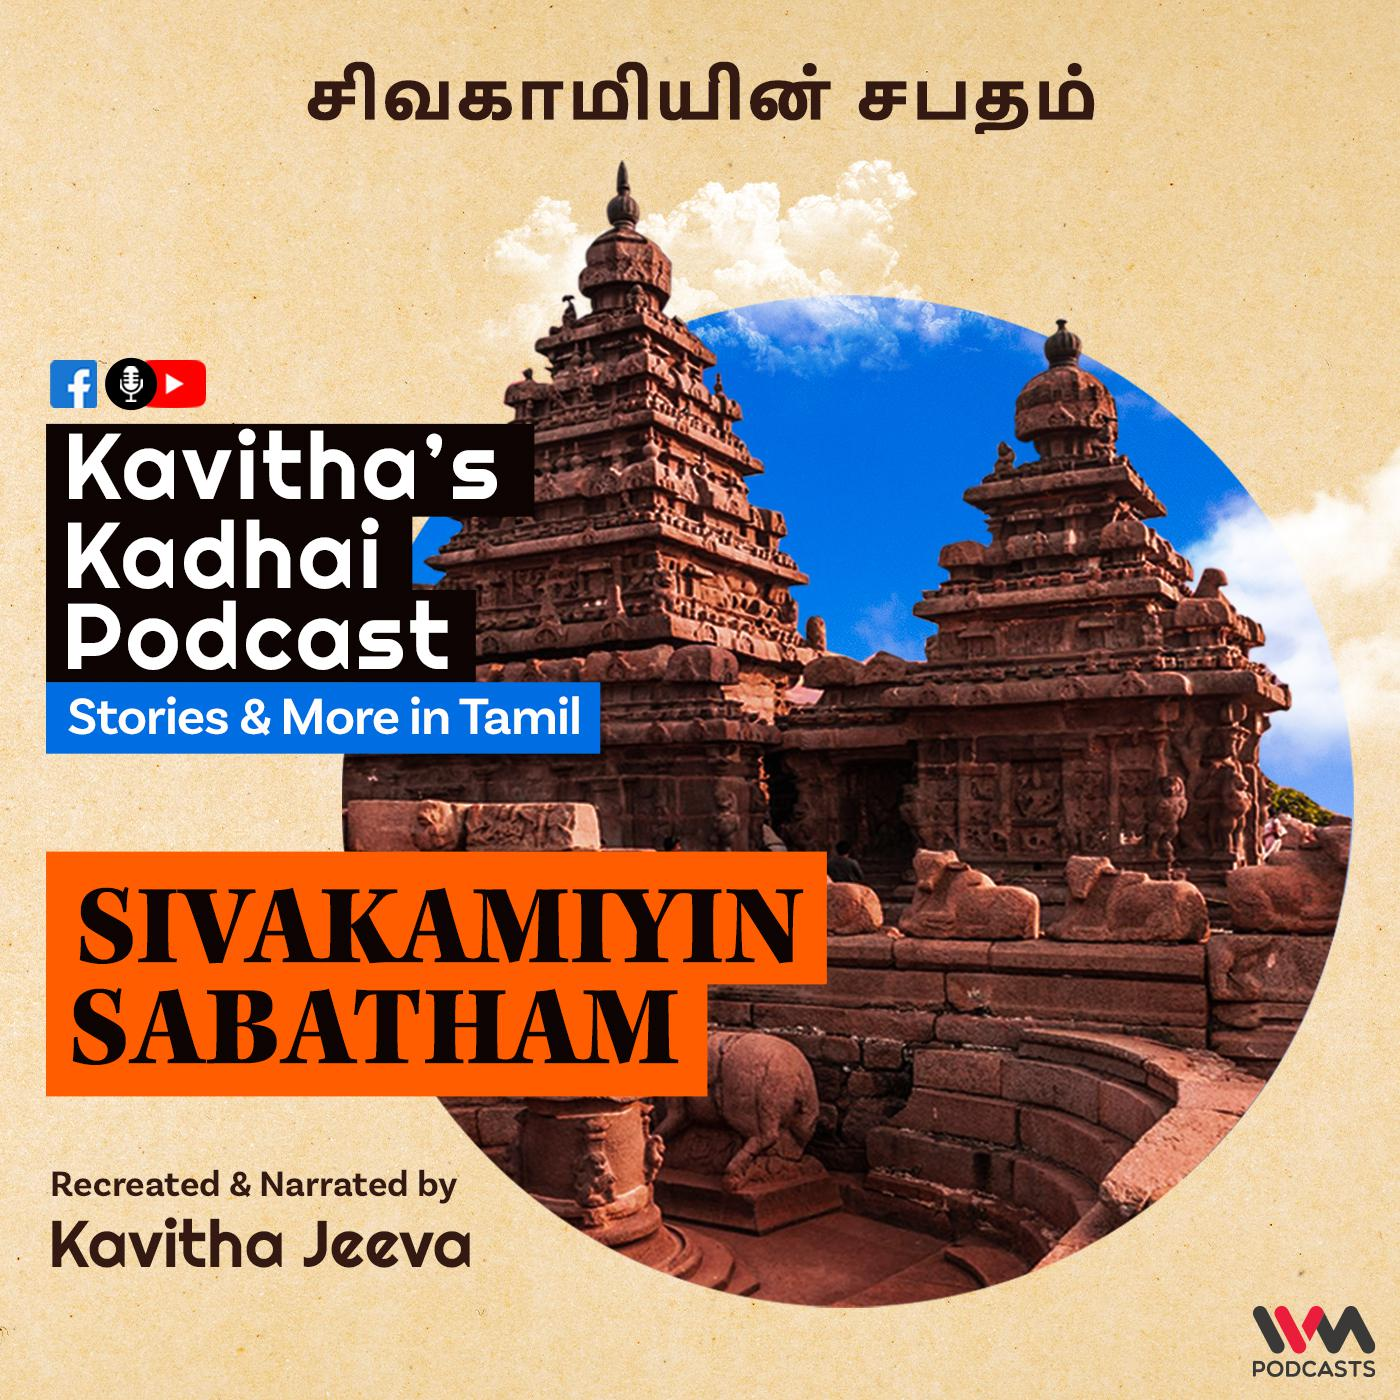 KadhaiPodcast's Sivakamiyin Sabatham with Kavitha Jeeva - Episode #107